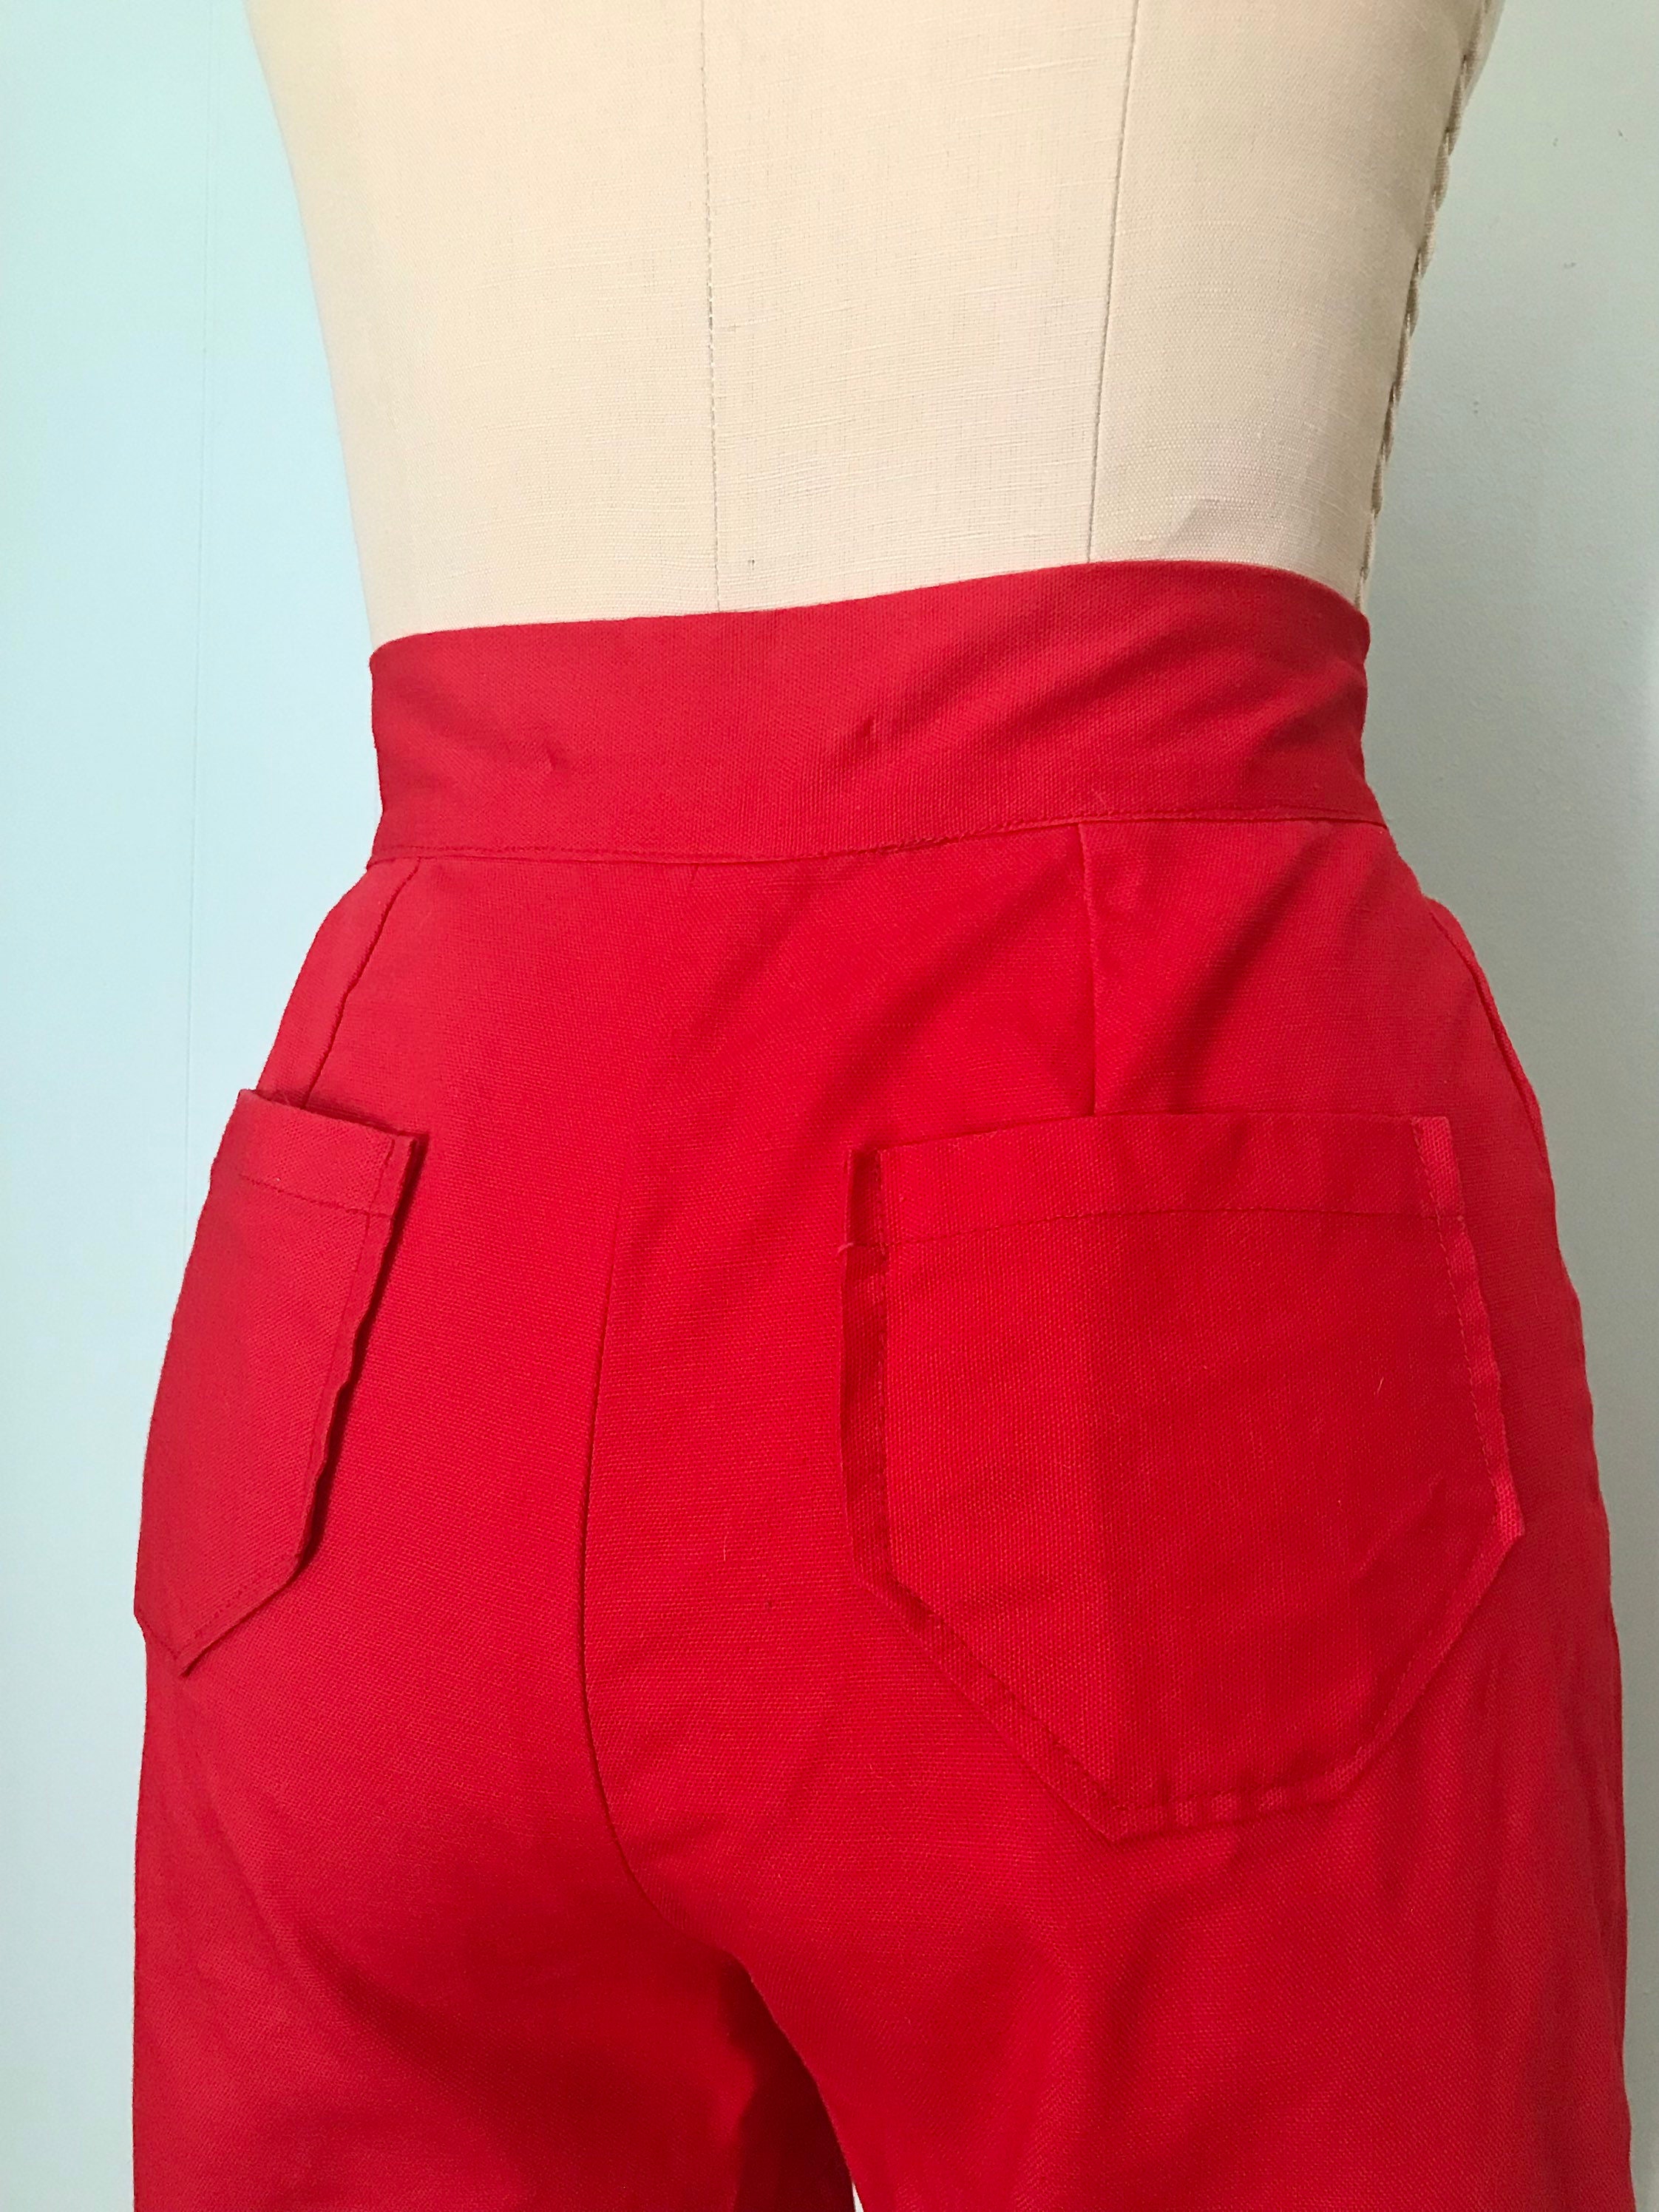 1970s Bright Tomato Red Shorts 70s Patch Pocket Shorts | Etsy